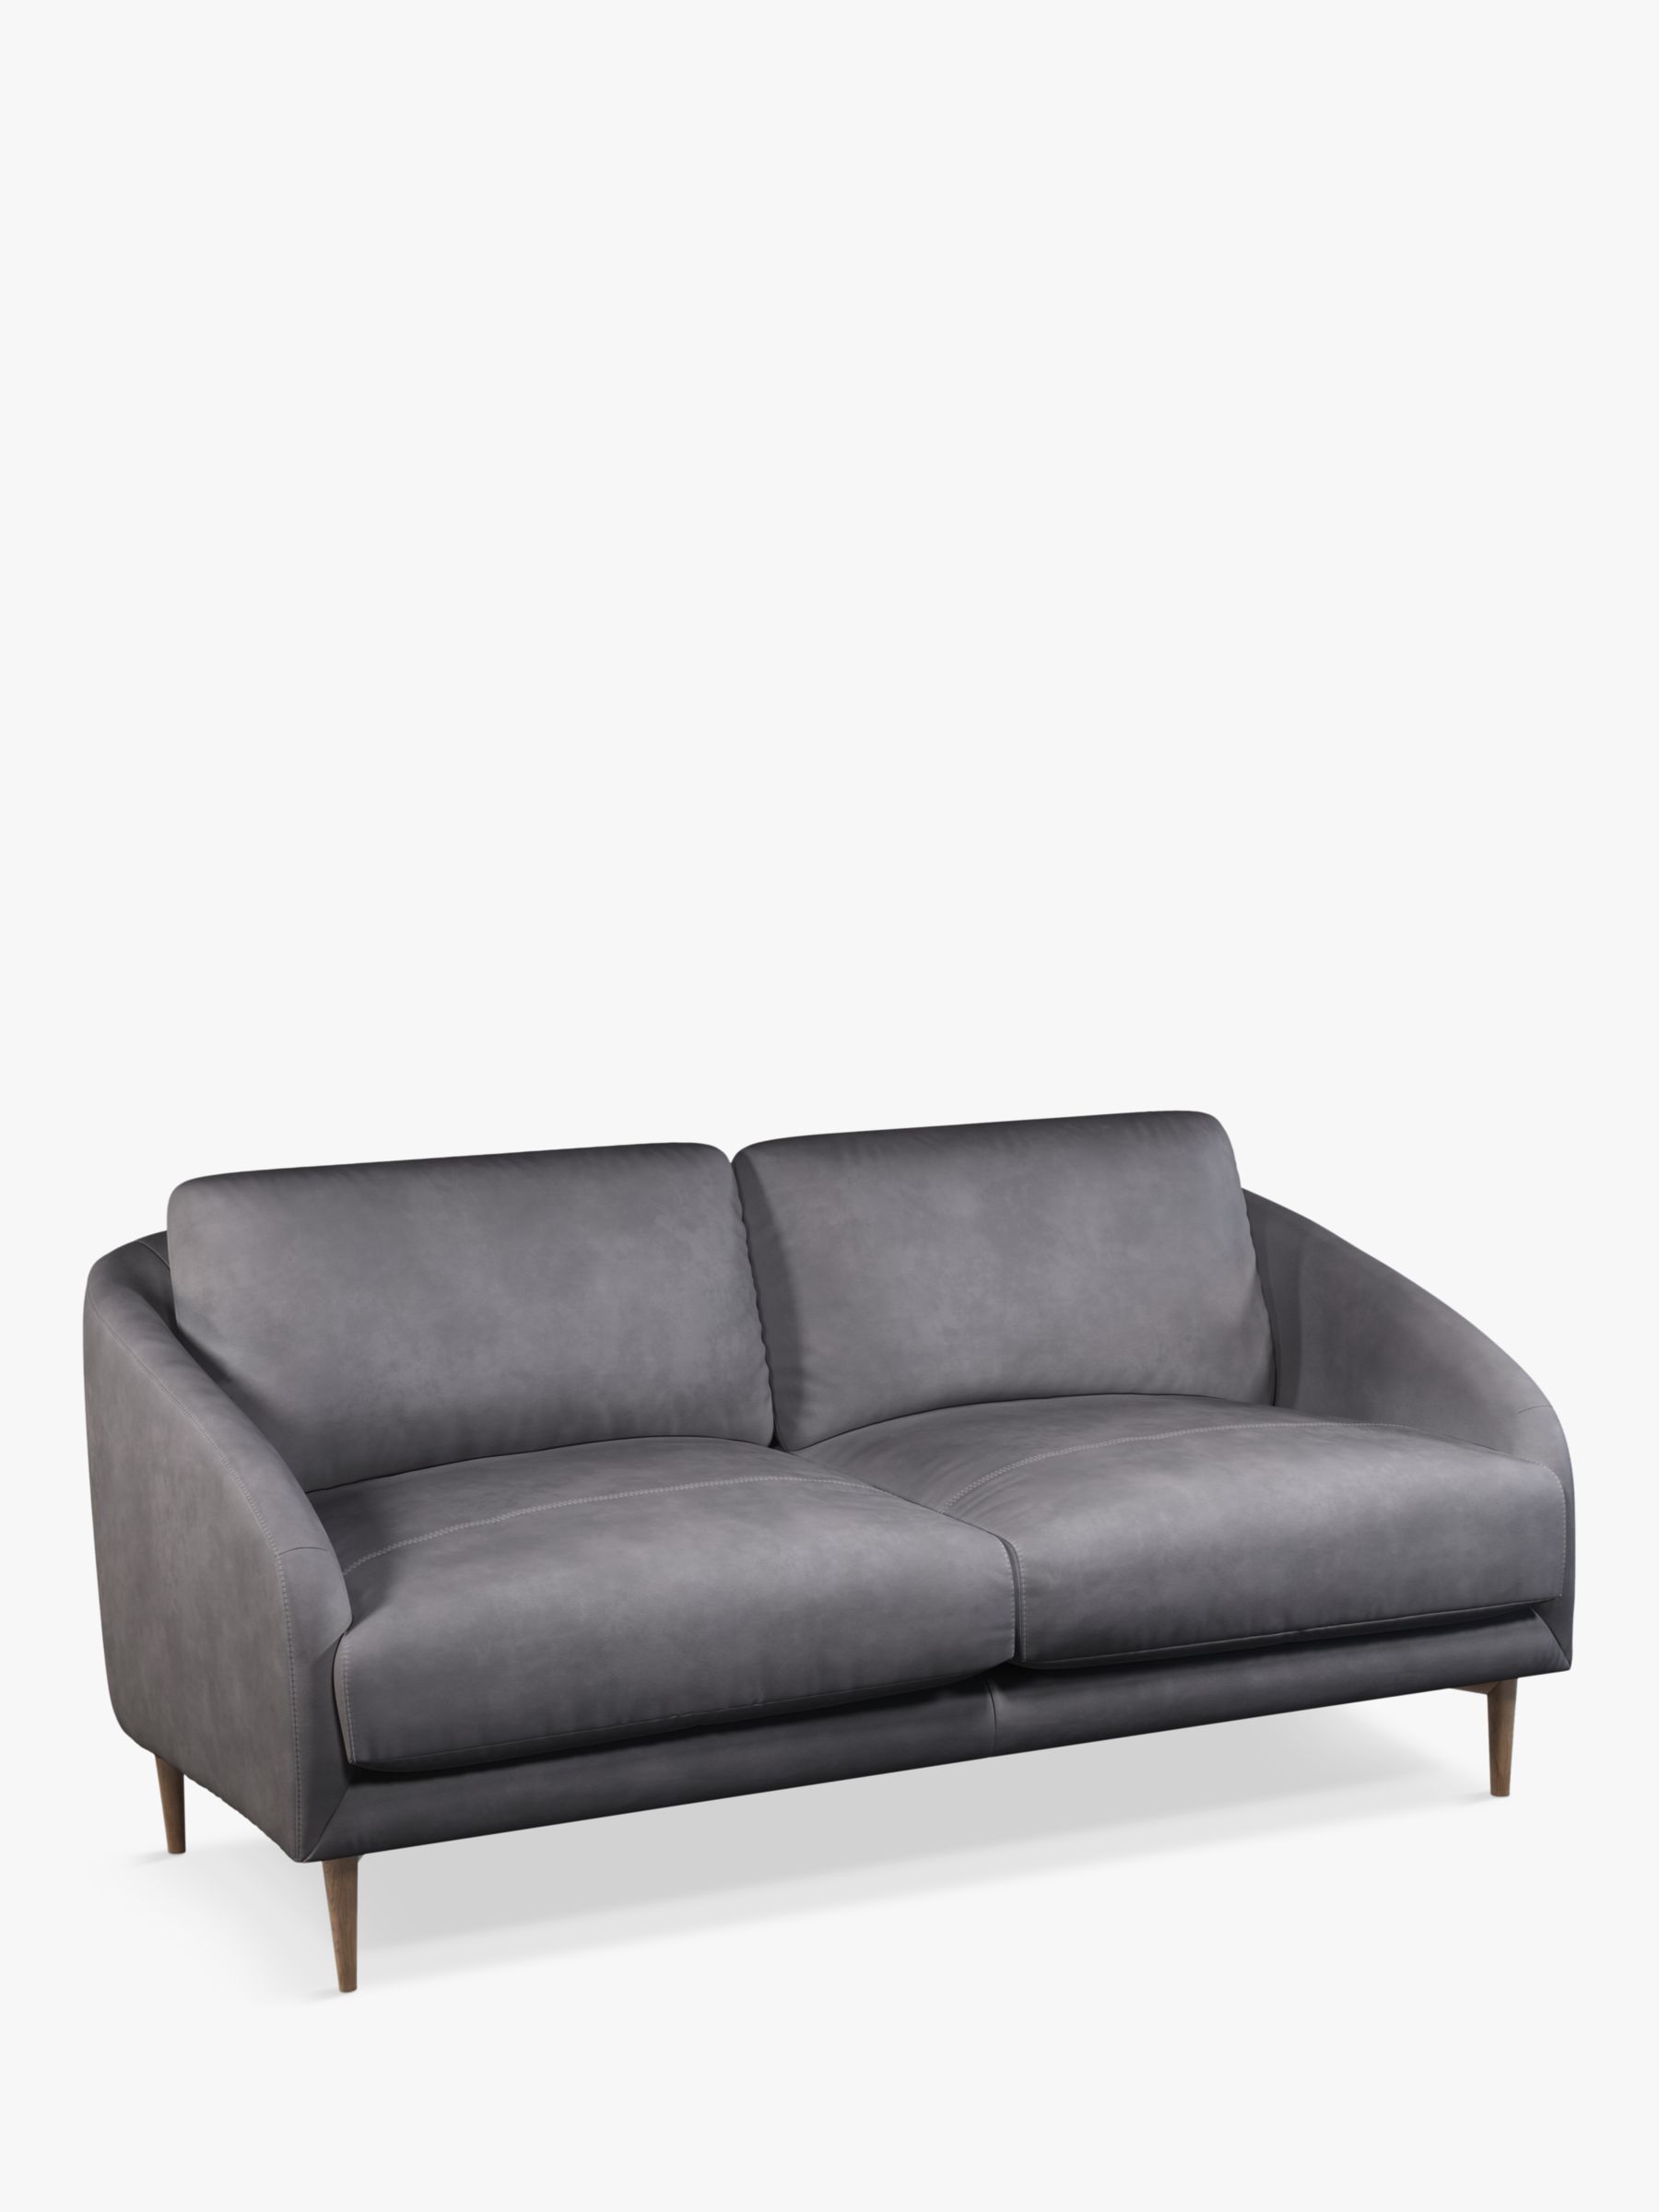 John Lewis & Partners Cape Medium 2 Seater Leather Sofa, Dark Leg